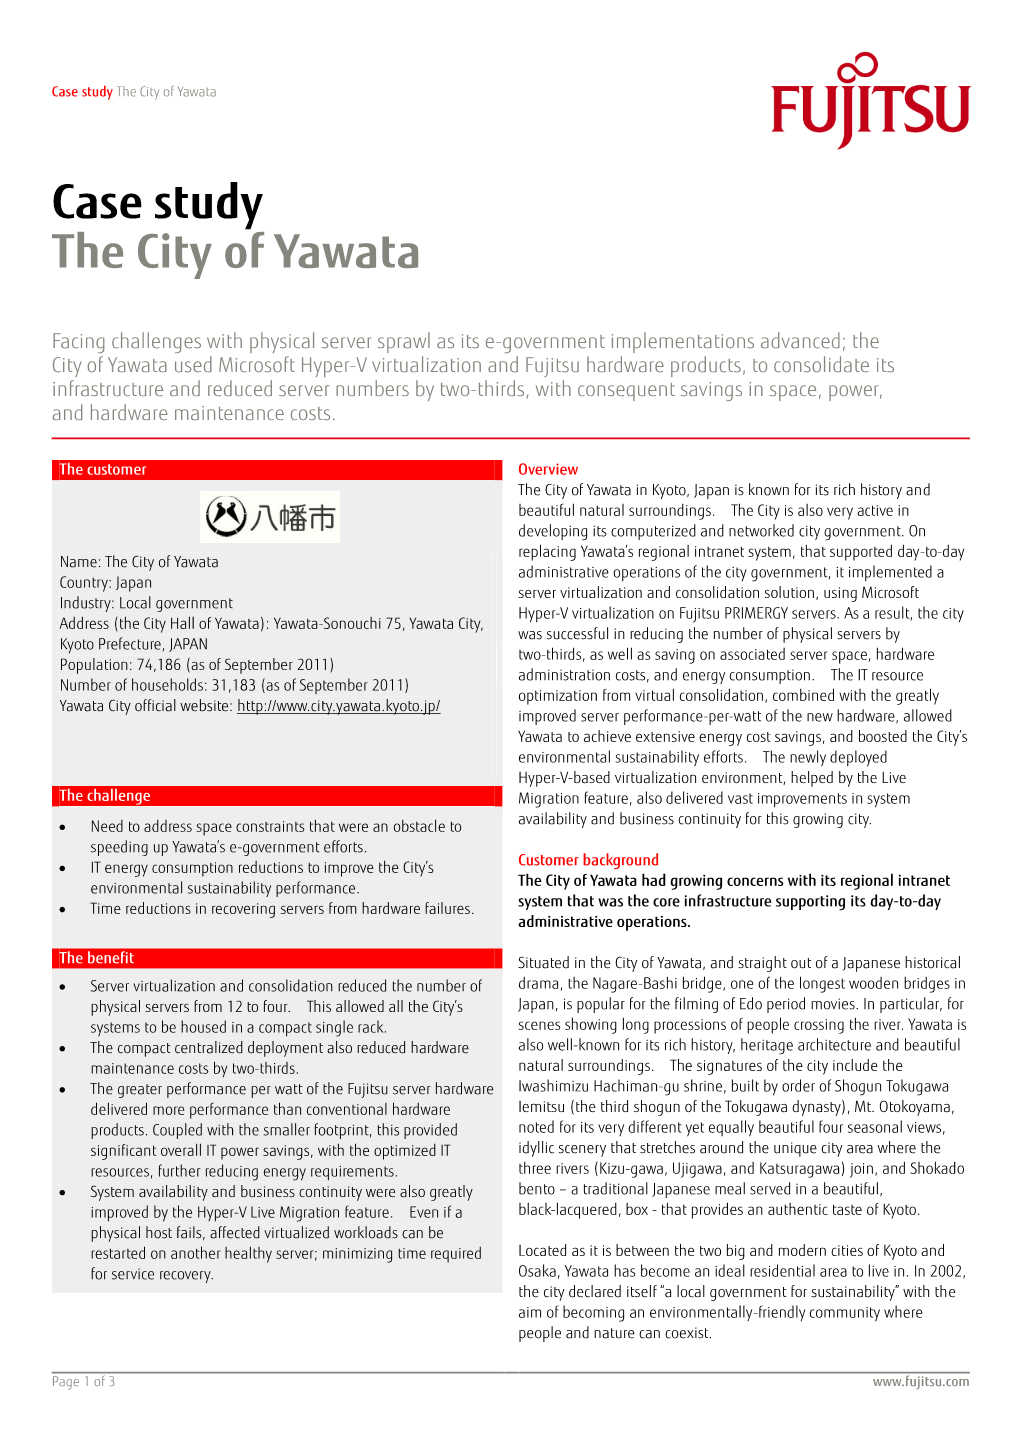 Case Study the City of Yawata